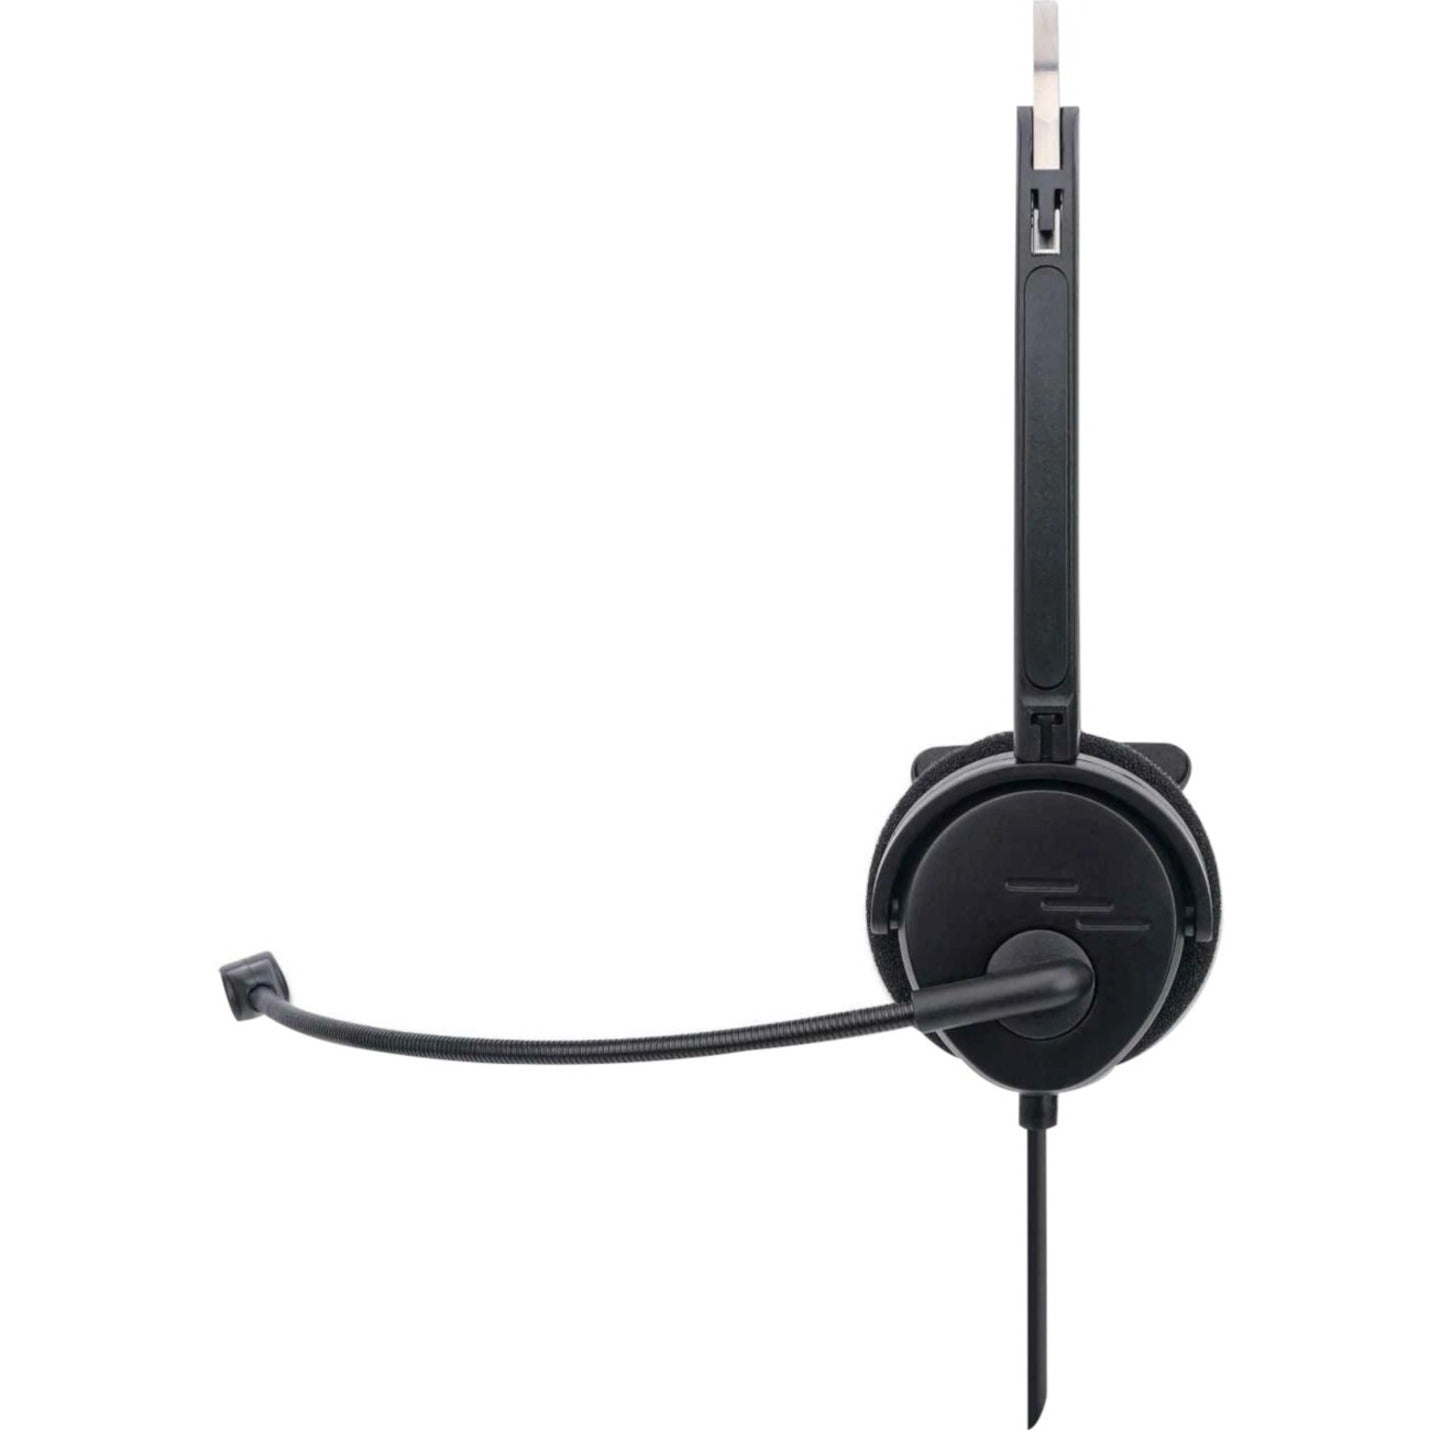 Manhattan 179867 Mono USB Headset, Lightweight, Hands-free, Adjustable Microphone